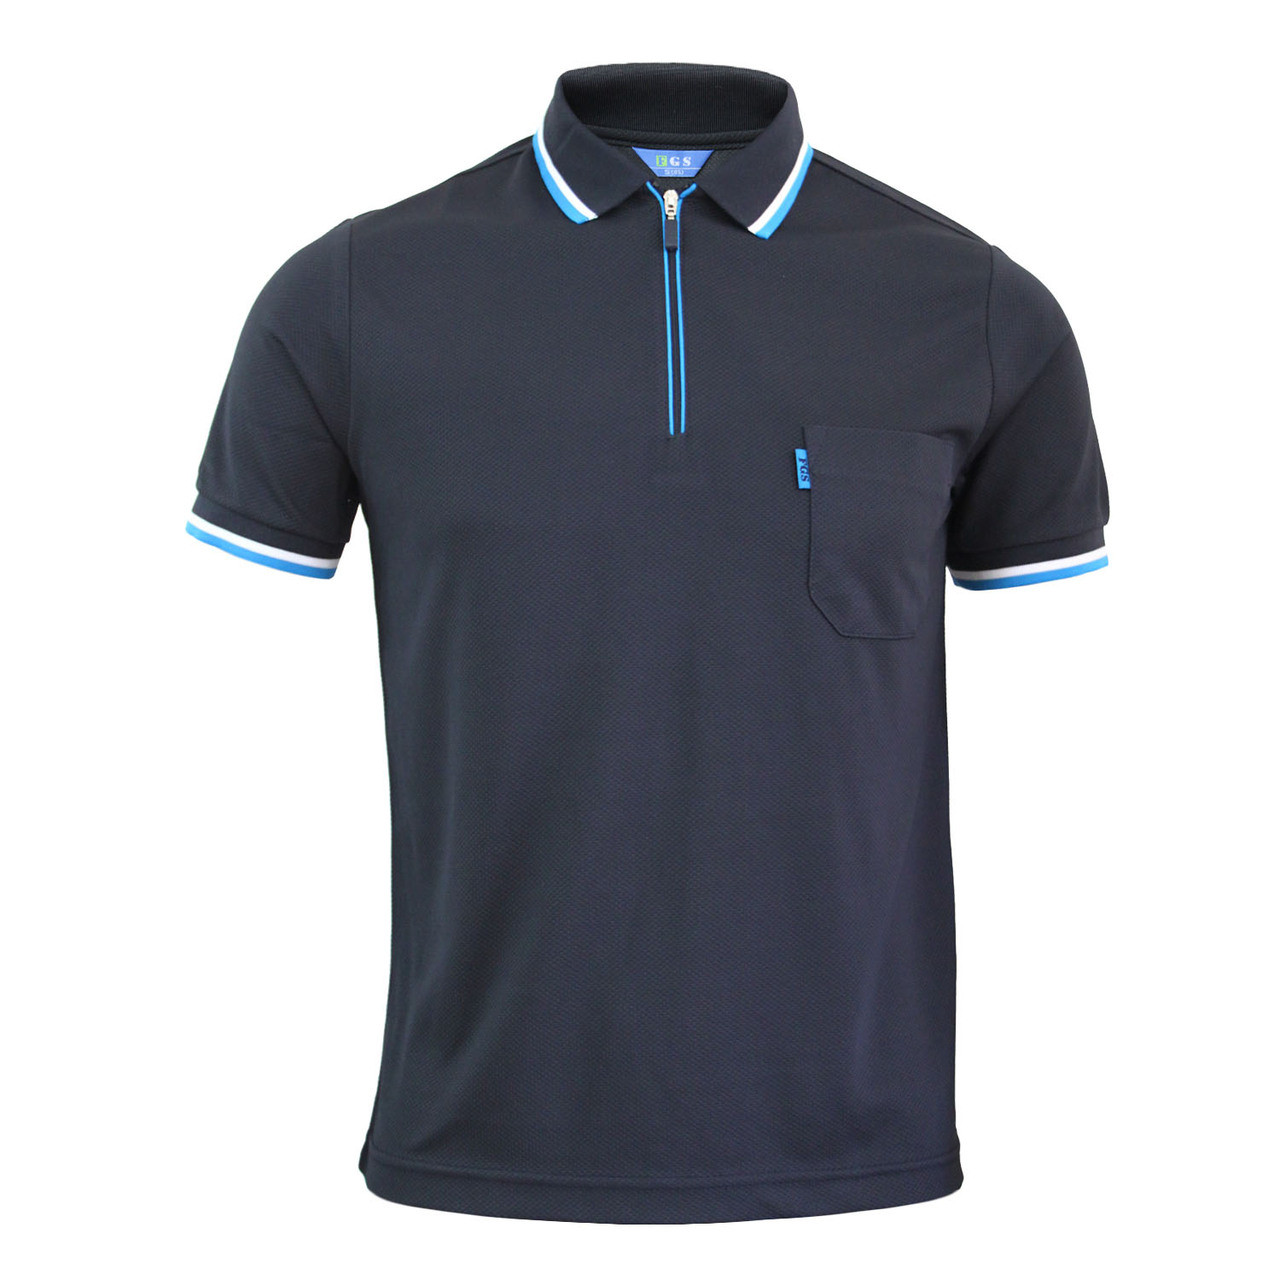 Navy Polo zip-up neck t-shirt short sleeves polo shirt.